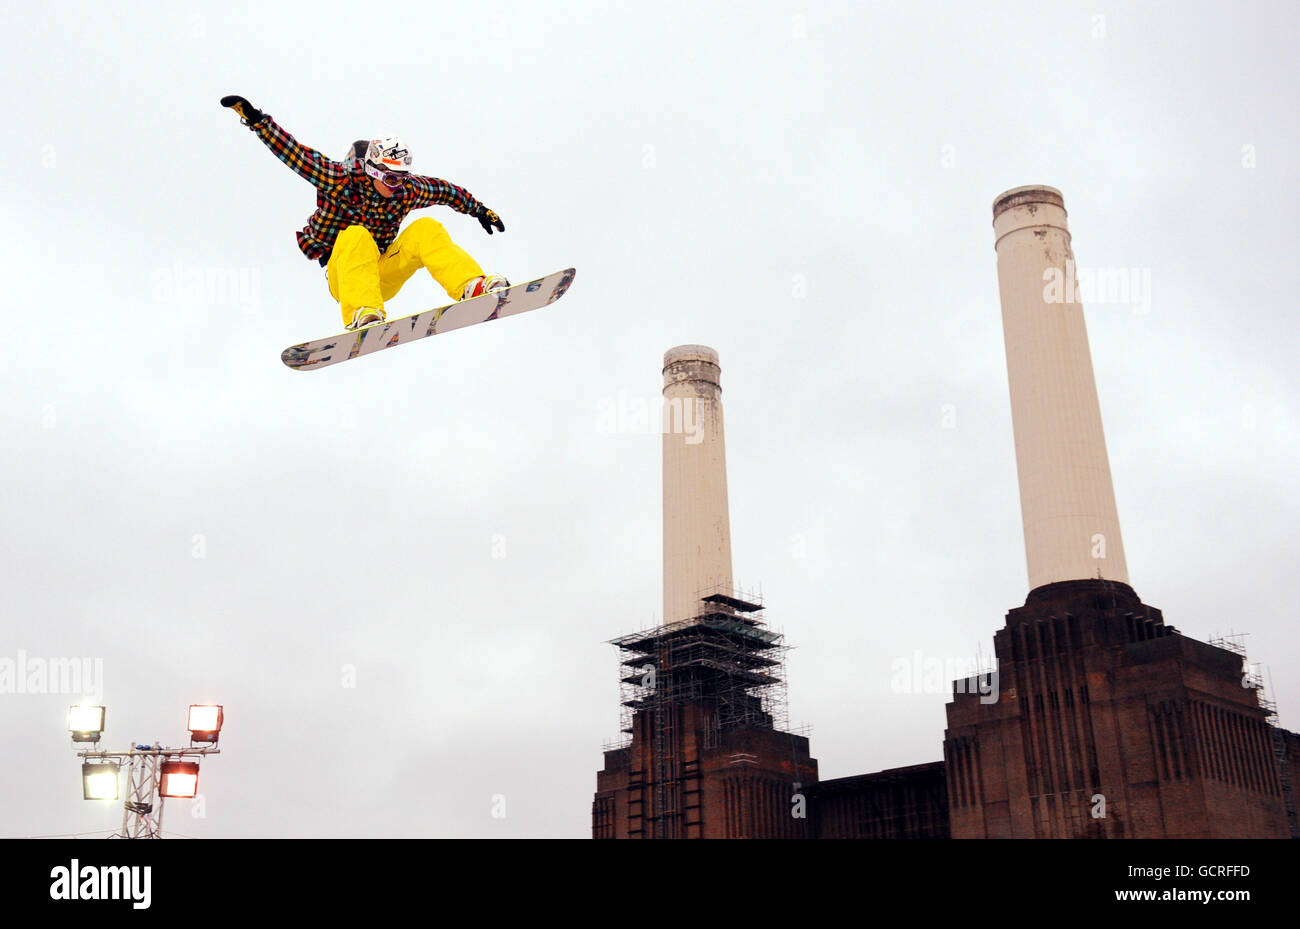 El snowboarder Don Harington practica en el implacable Freeze Festival, Battersea Power Station, Londres. Foto de stock